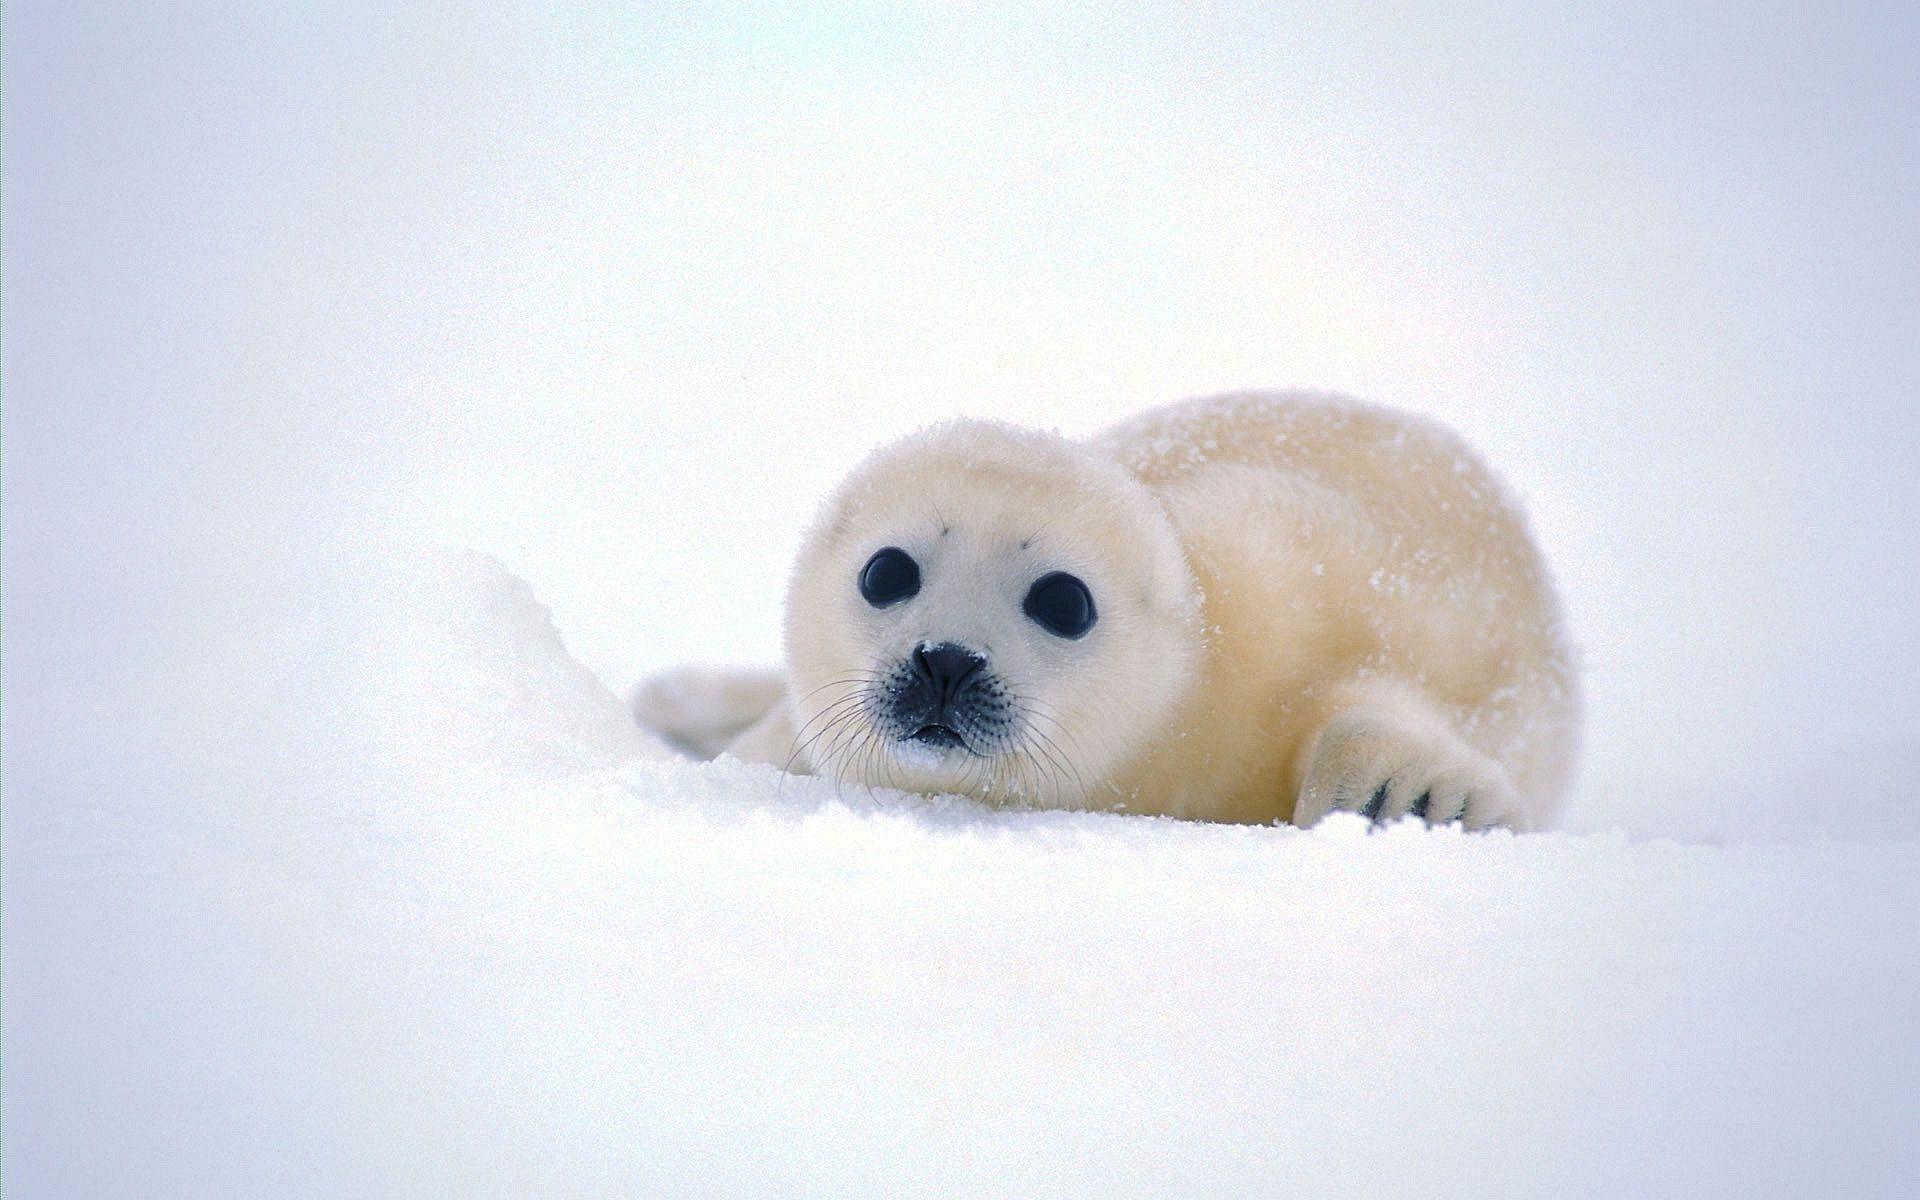 Baby Seal Wallpaper